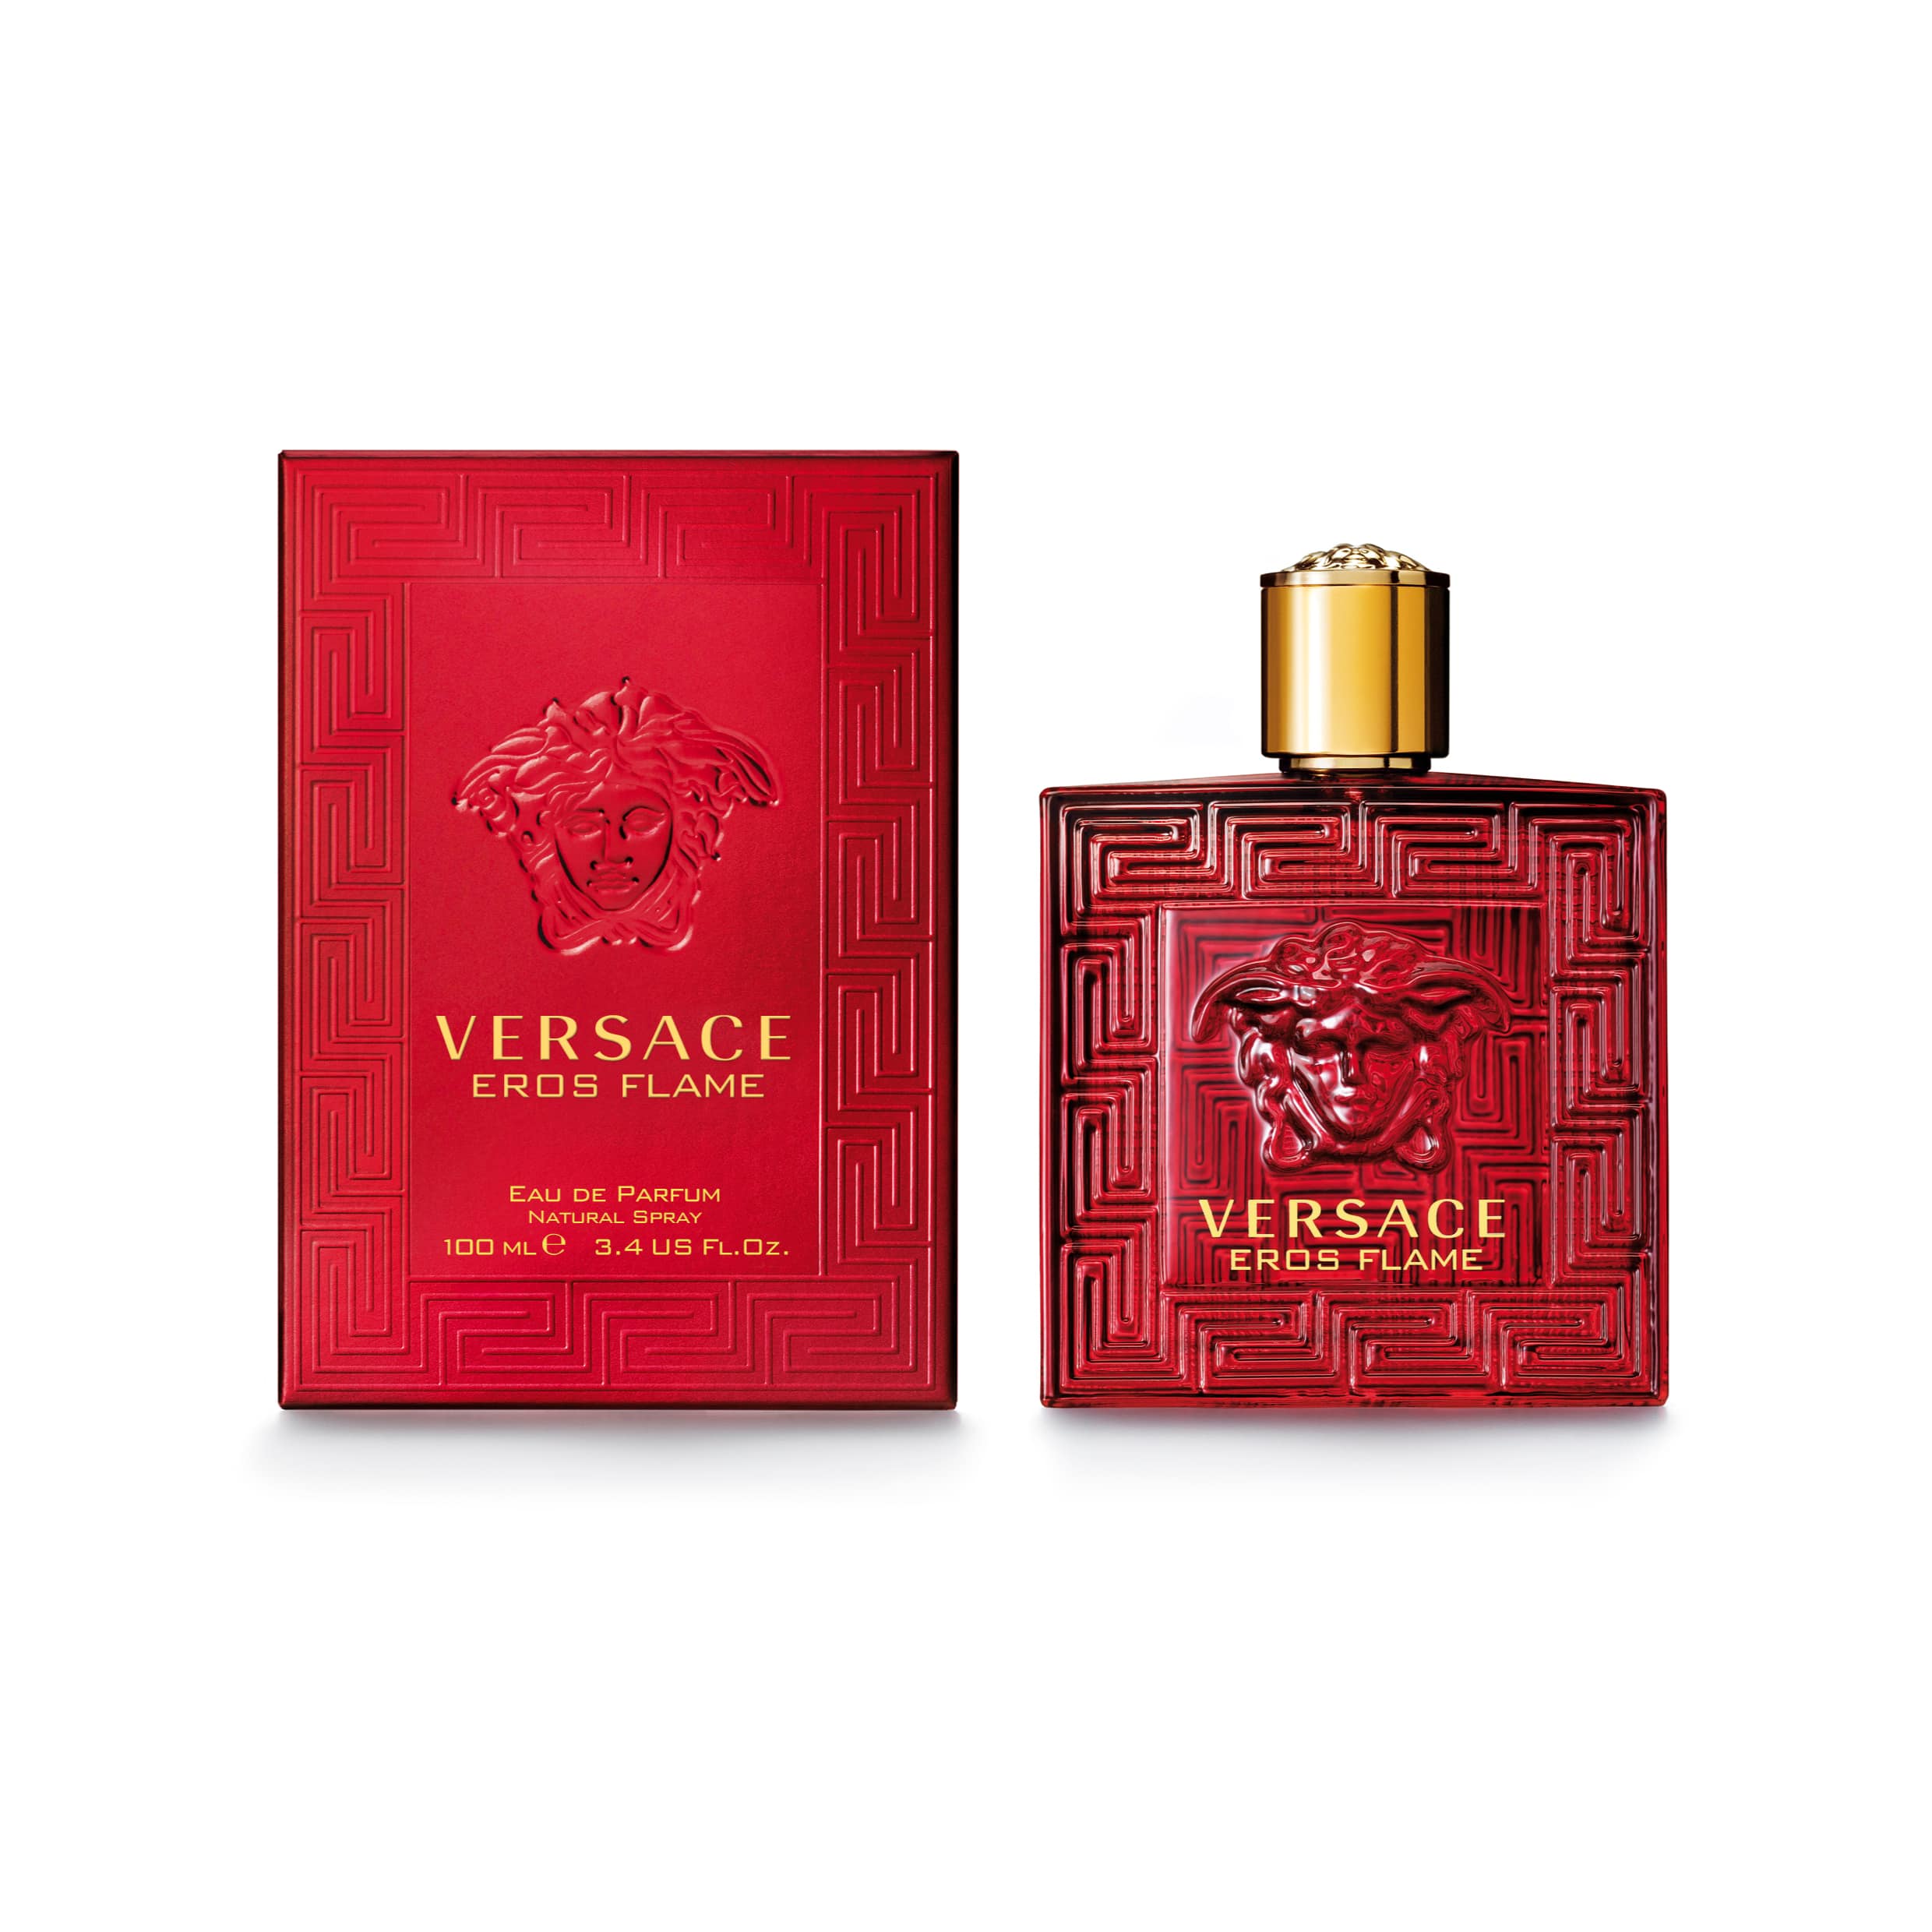 Versace Eros Flame Eau De Parfum 100 ml - Fedra